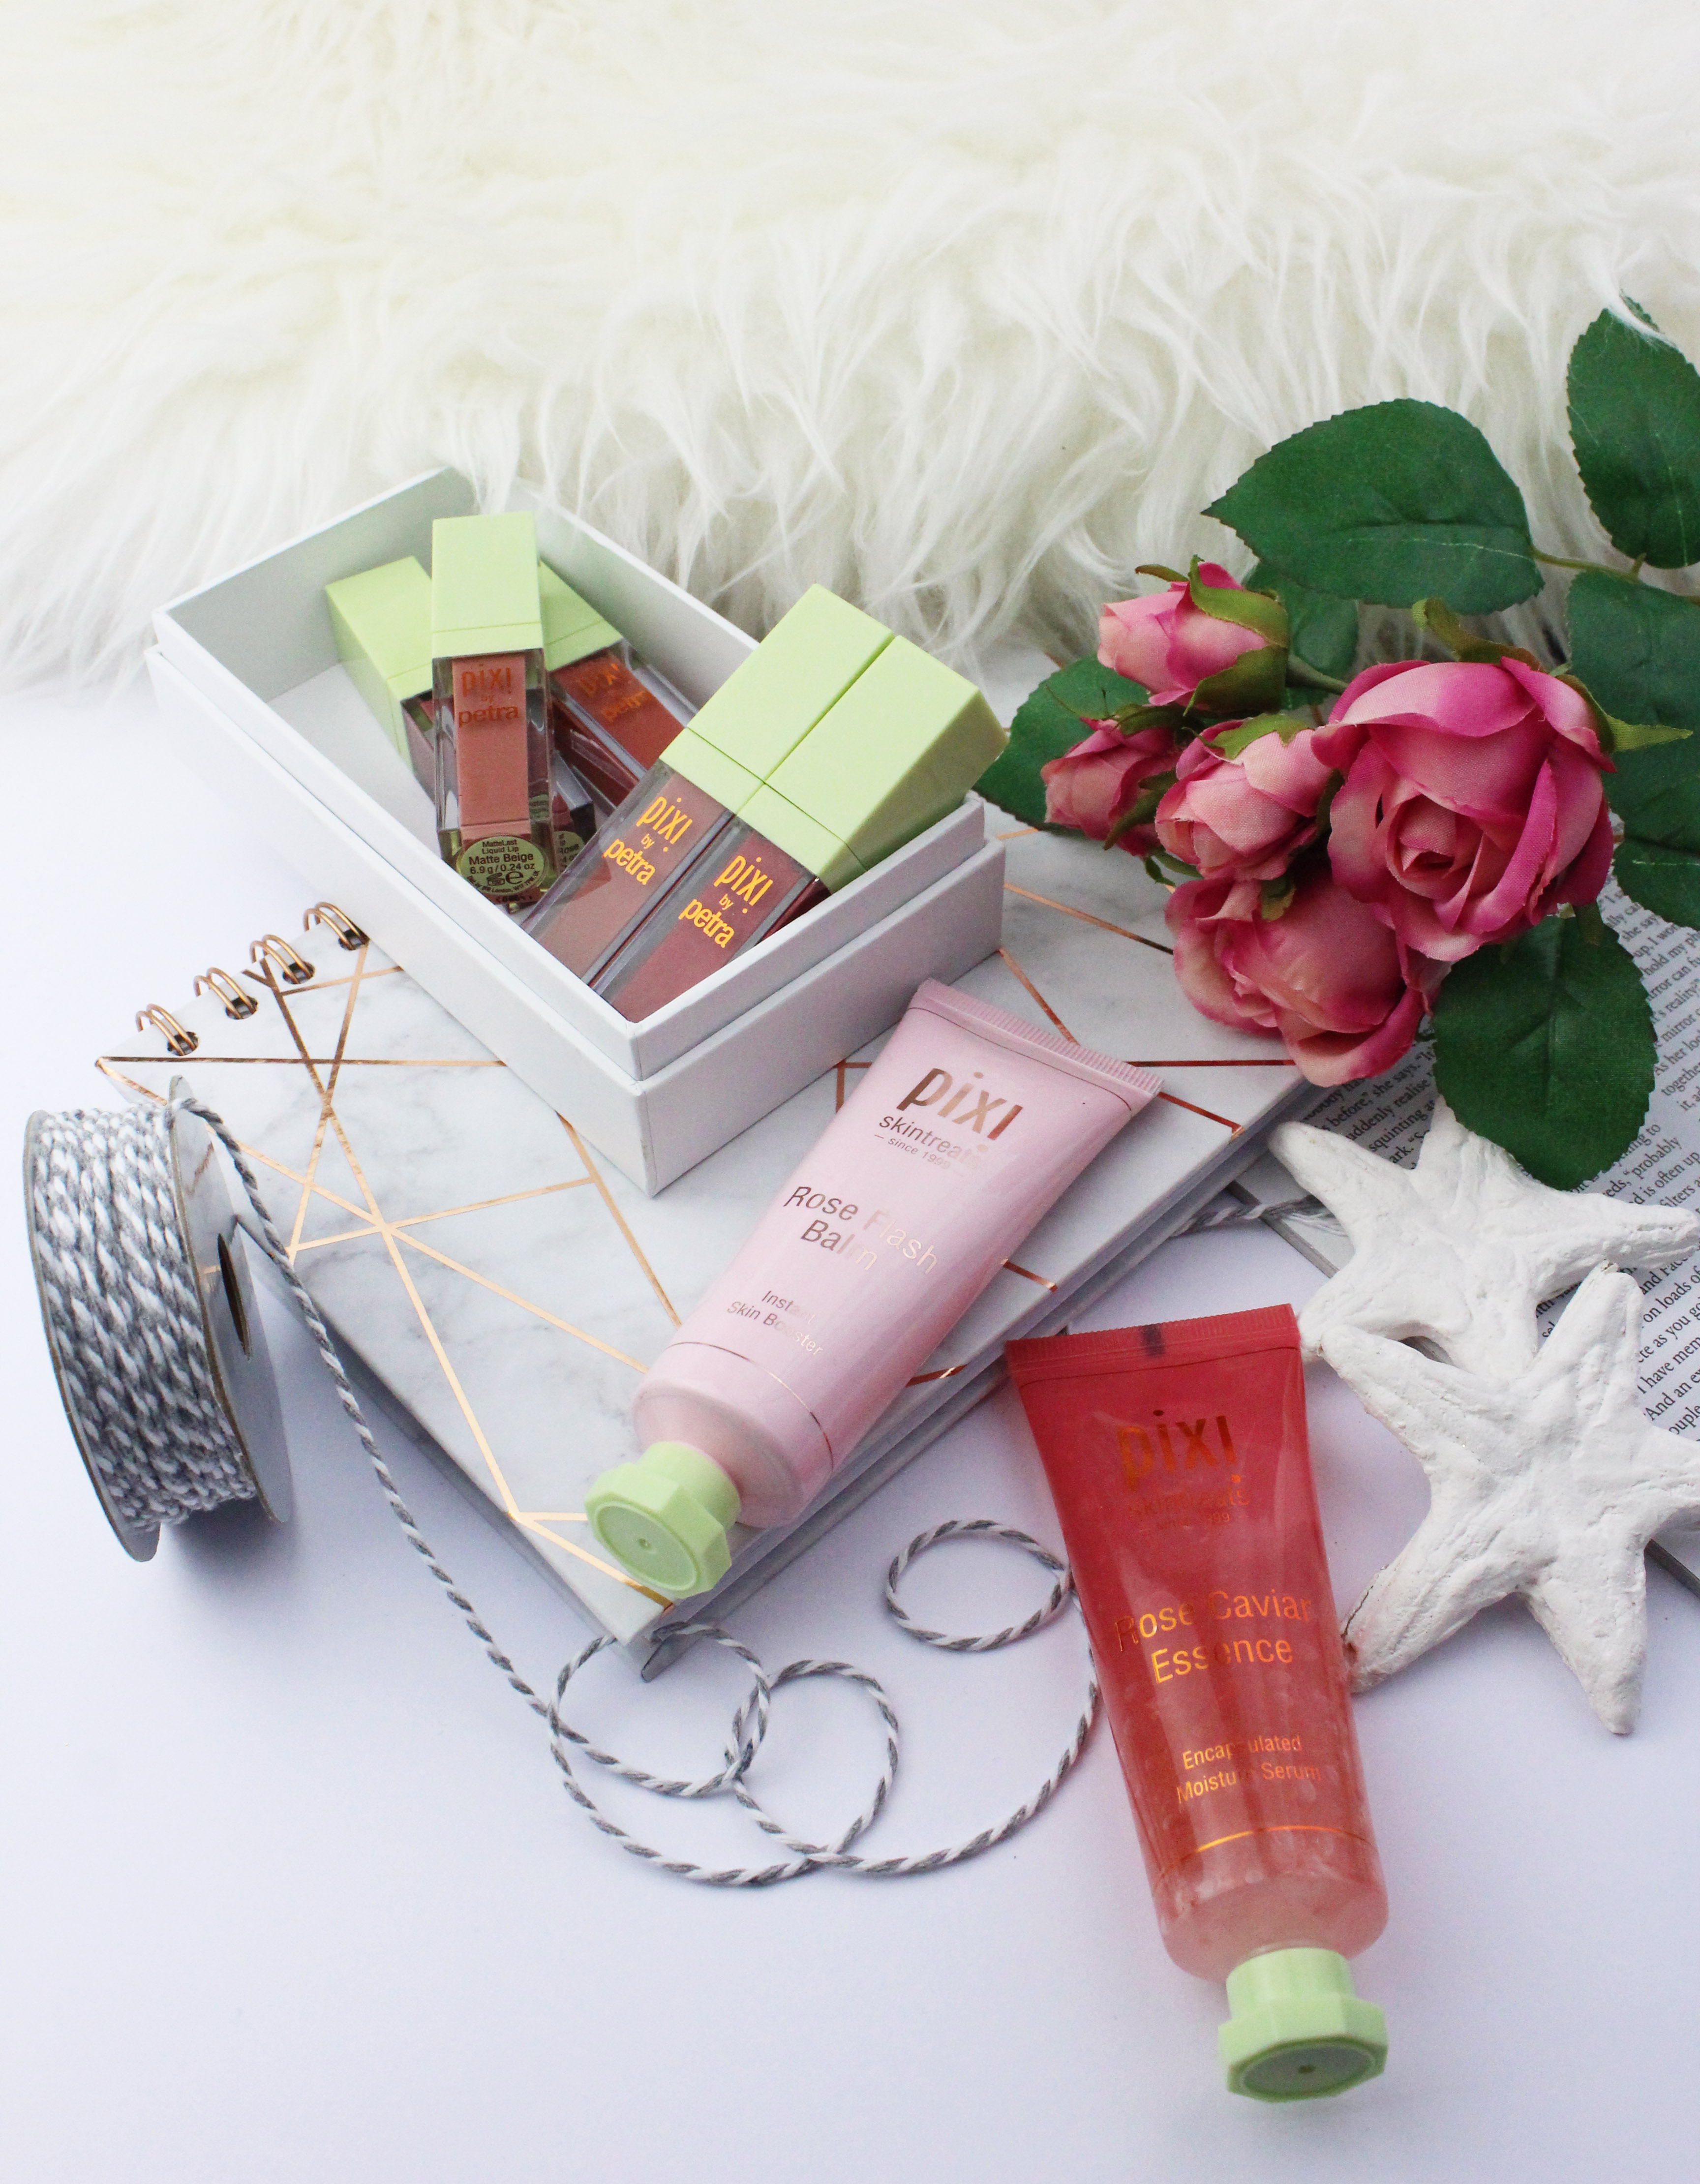 Pixi Beauty - New Launches - MatteLast Liquid Lip, Rose essence and rose flash balm